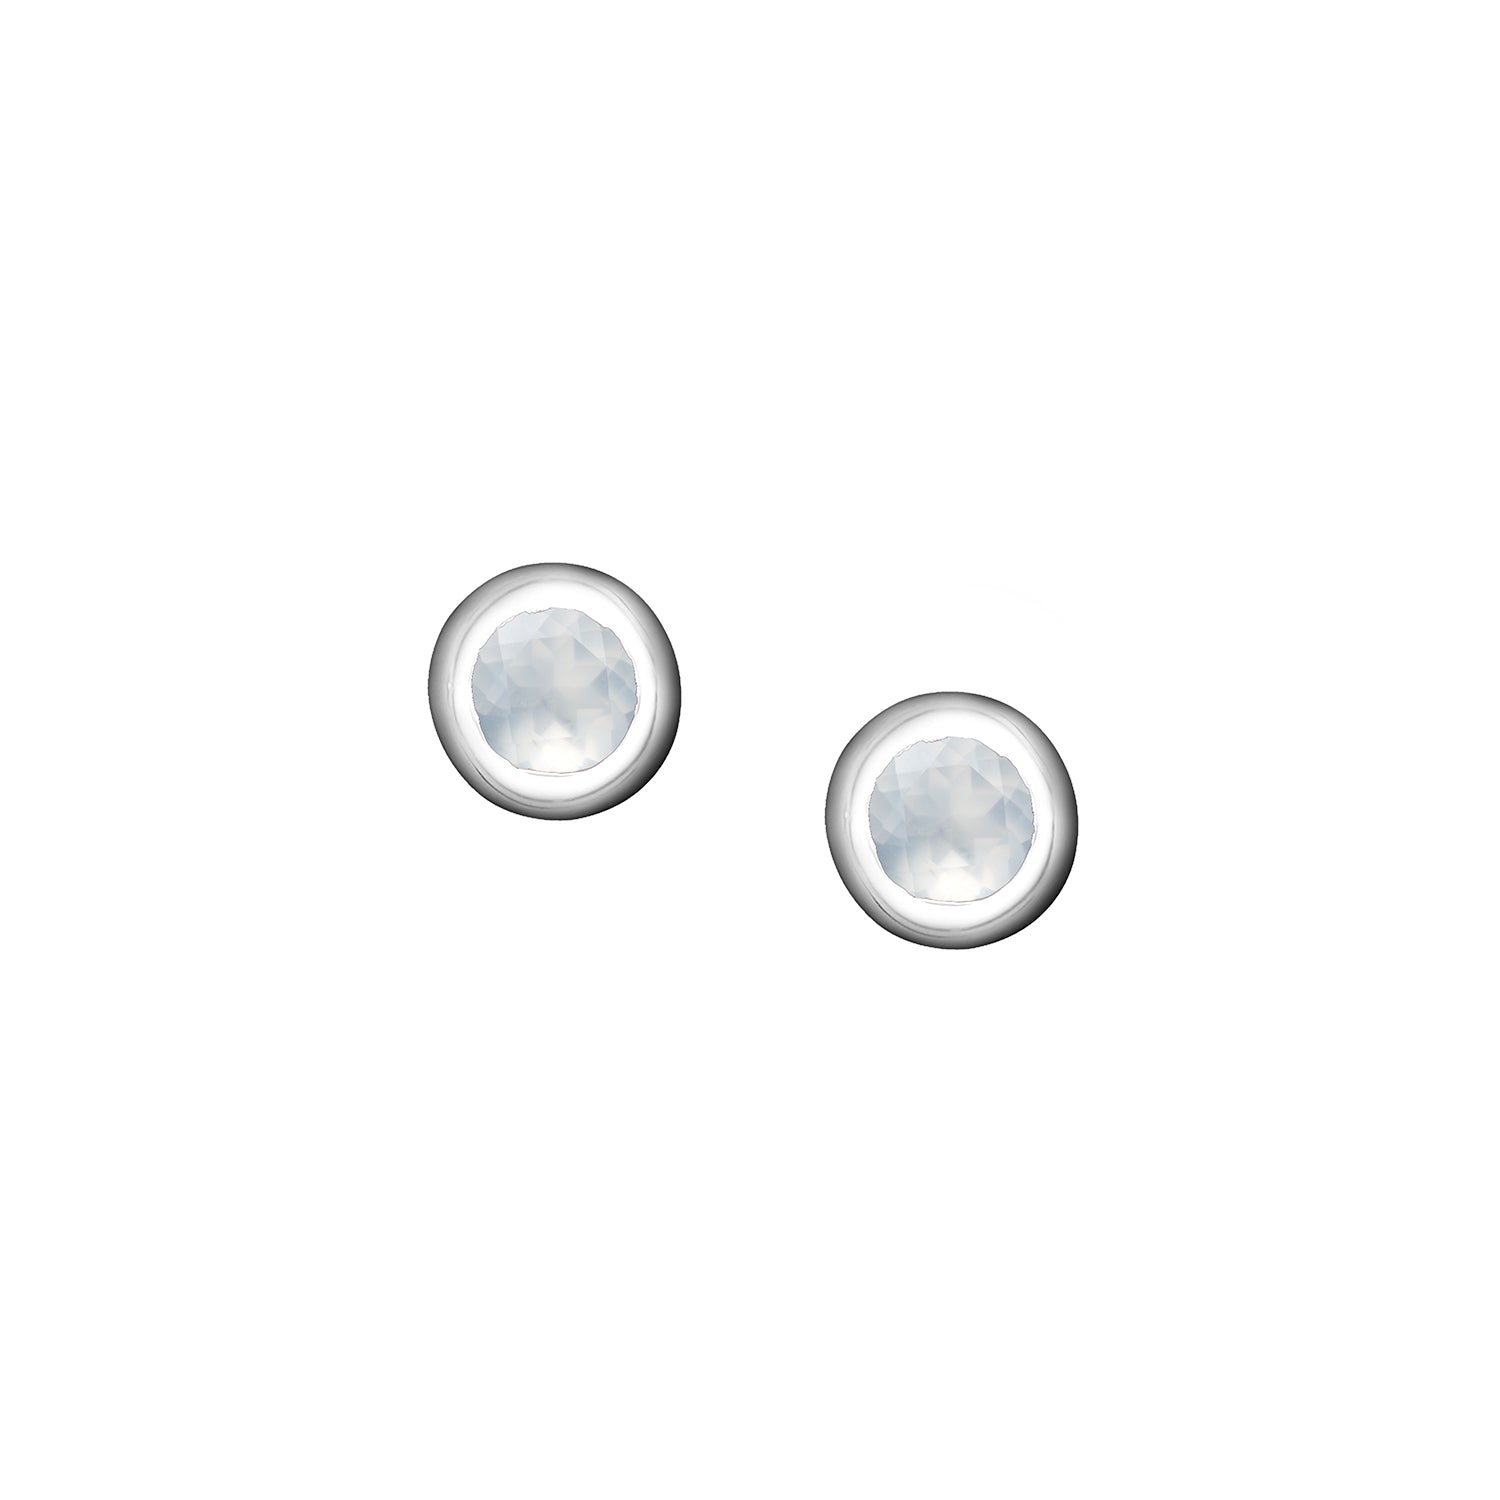 Polished Silver Crescent Moon Birthstone Earrings - June / Moonstone